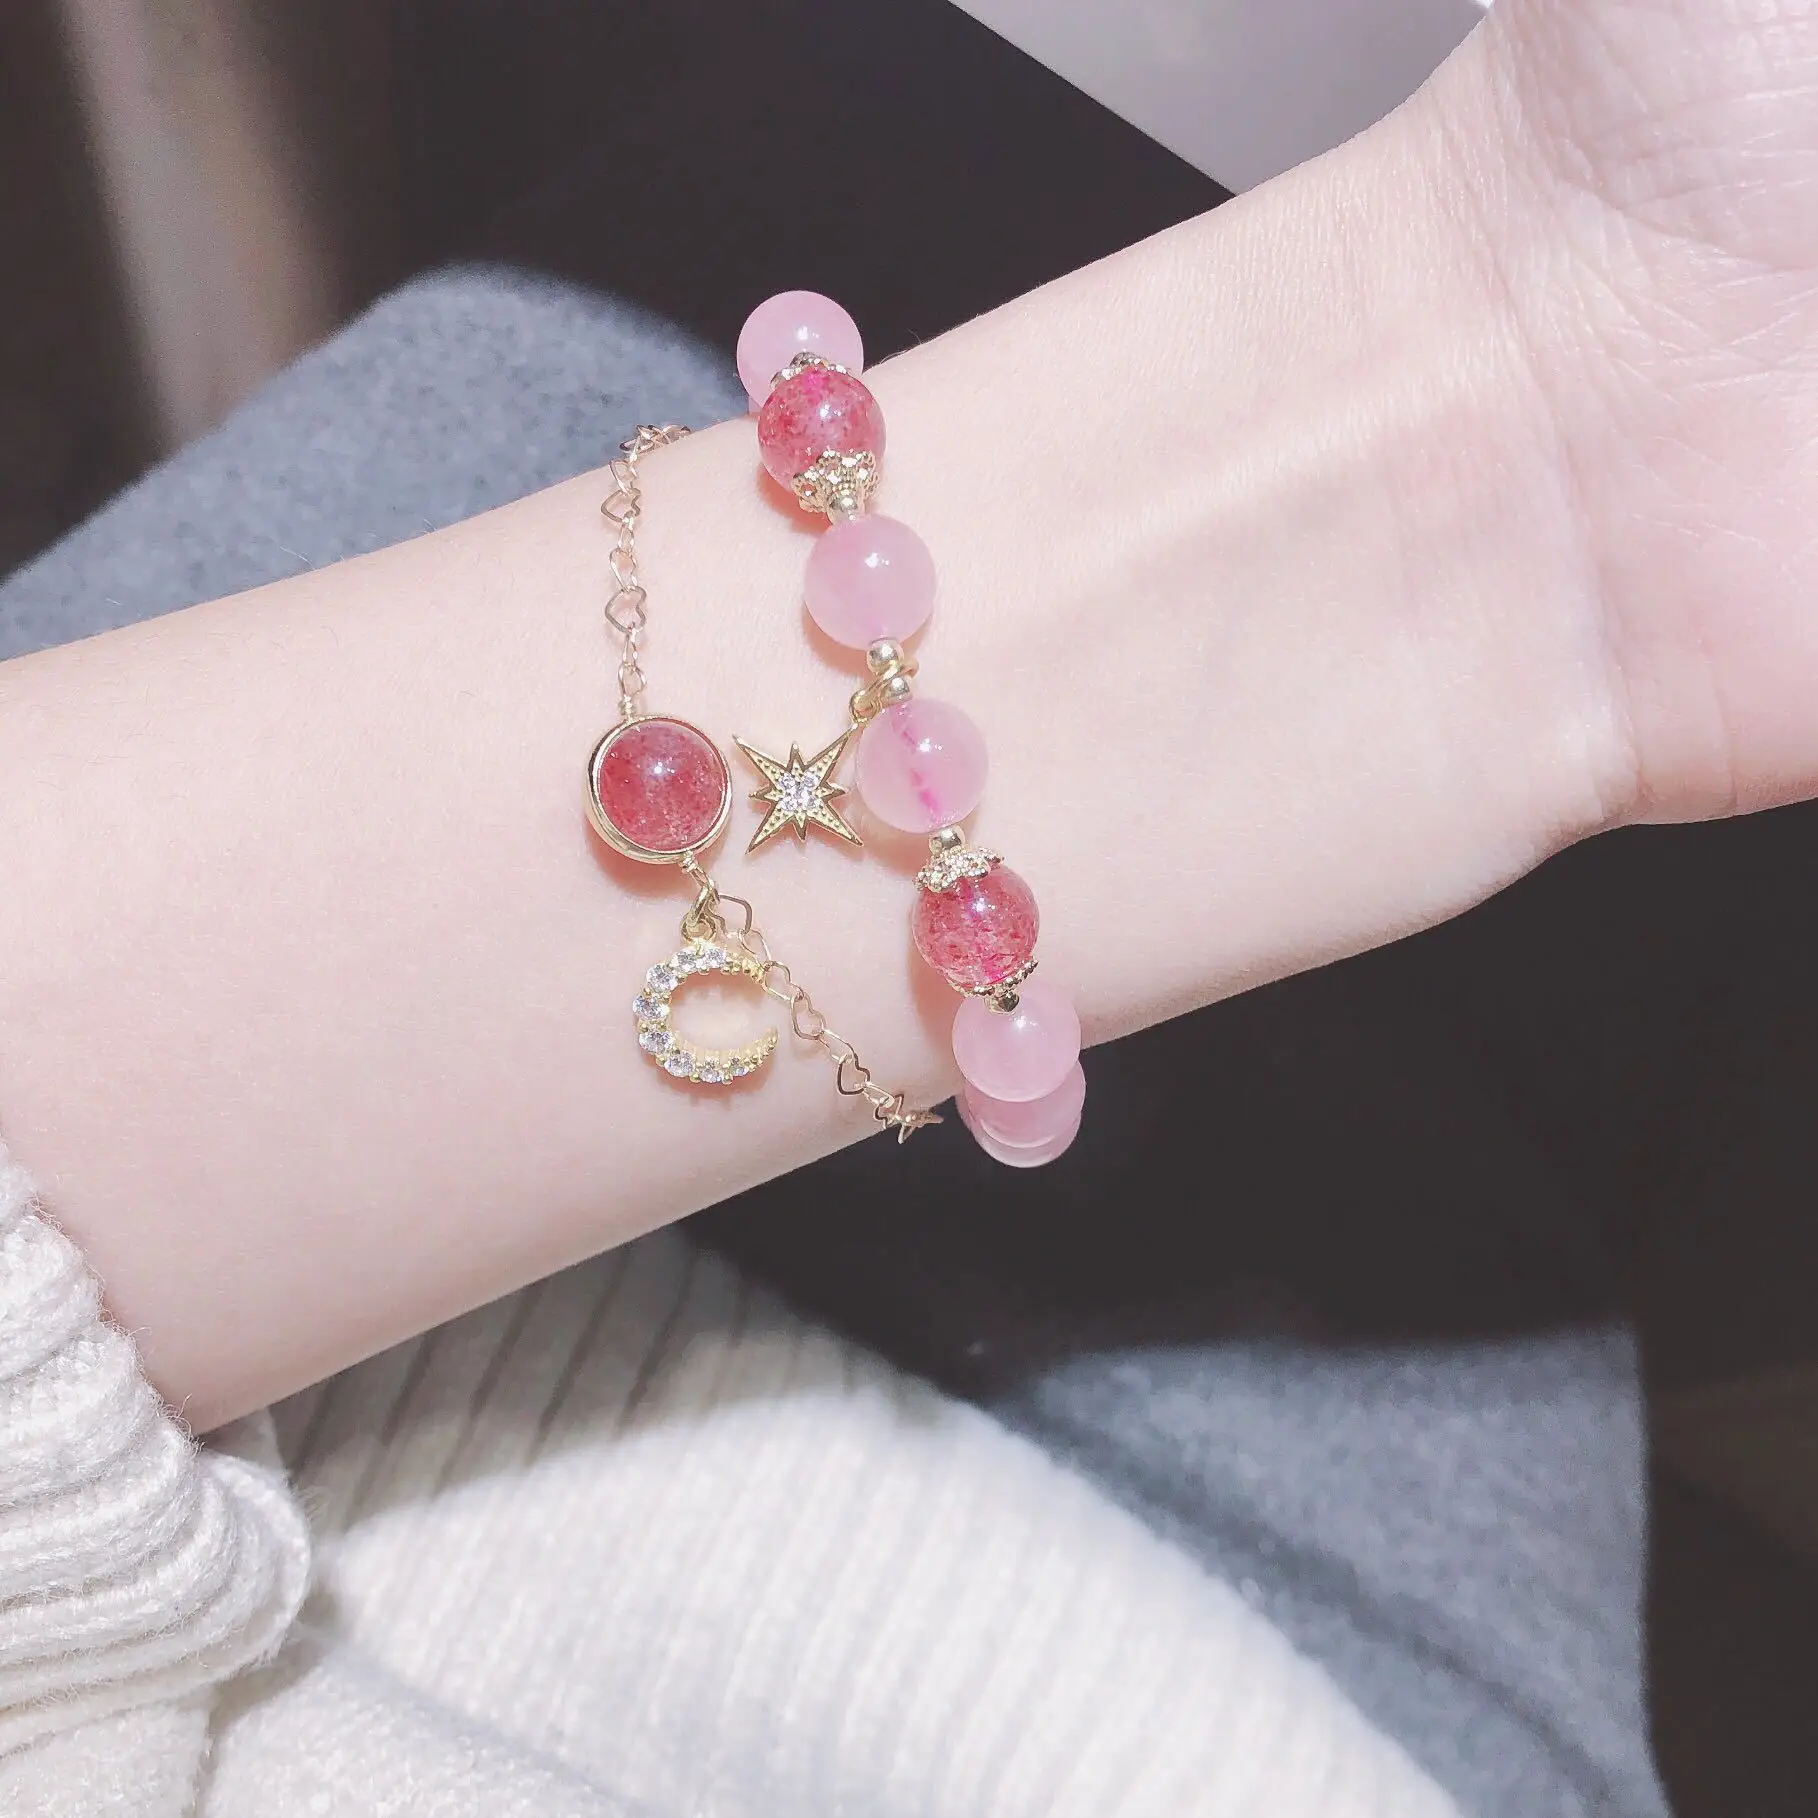 

Strawberry Crystal Pink Crystal Women's Transit Star Moon Bracelet Recruit Peach Blossom Valentine's Day Gift Birthday Gift